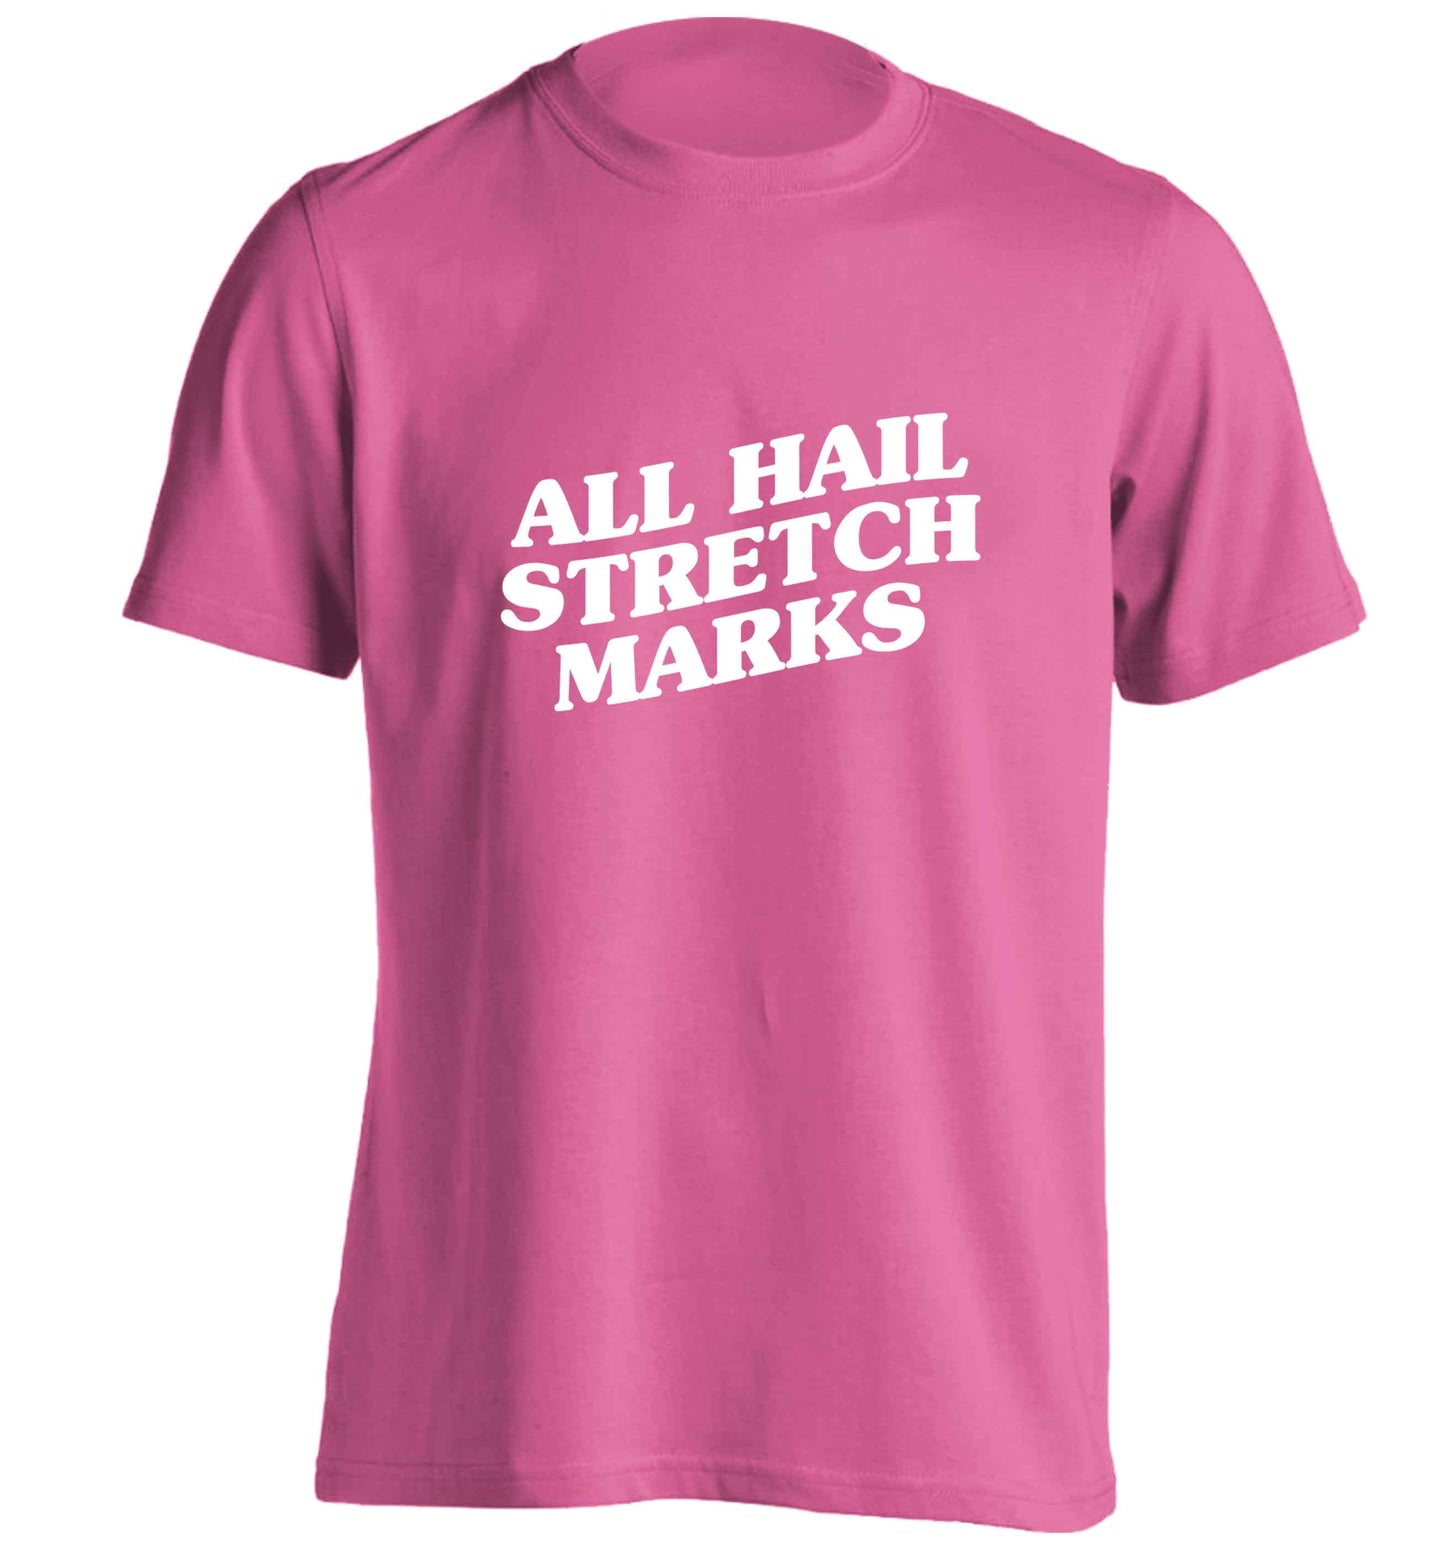 All hail stretch marks adults unisex pink Tshirt 2XL